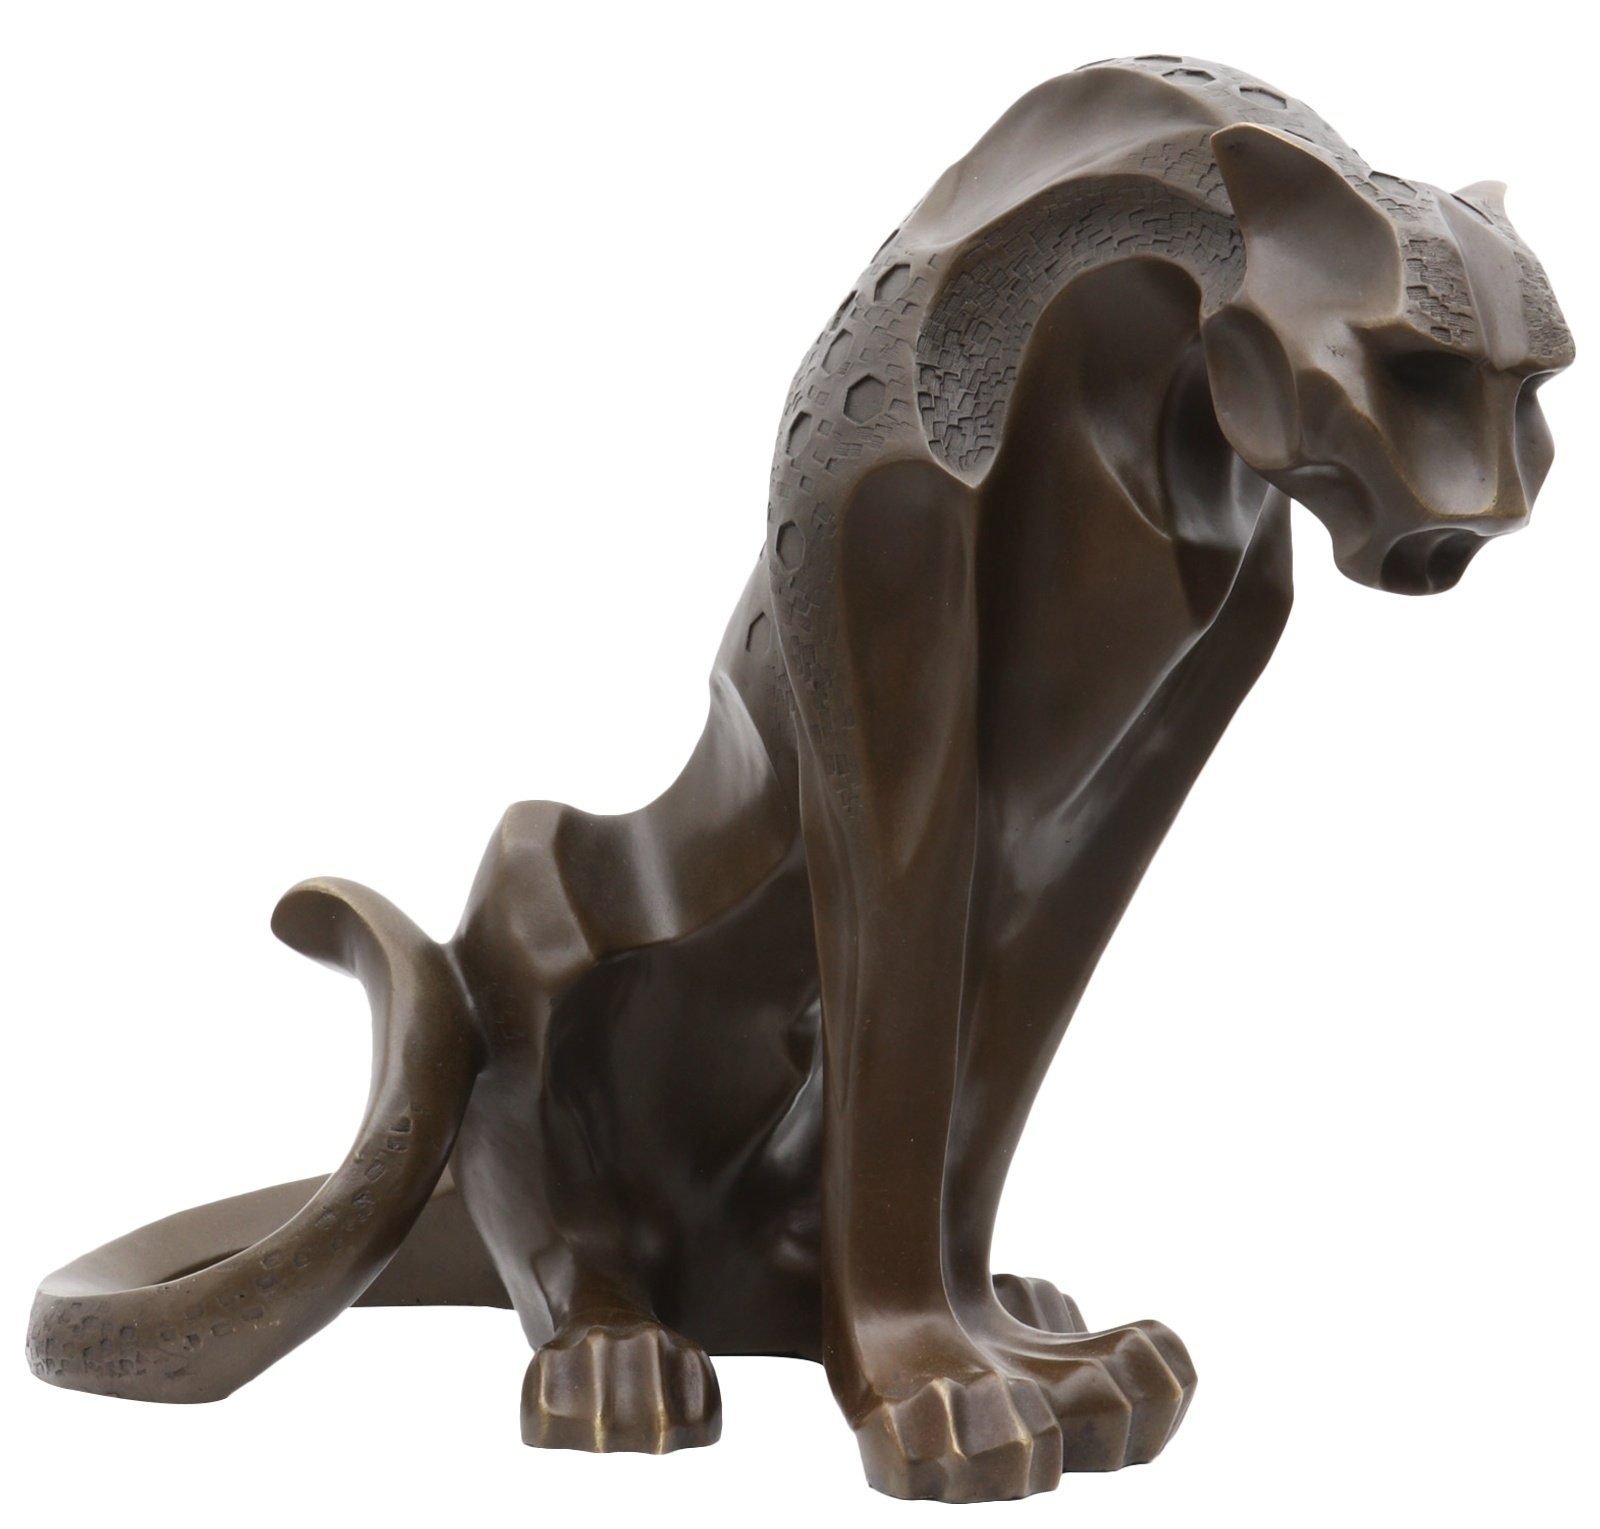 Aubaho Skulptur Bronzeskulptur Gepard Antik-Stil Bronze Figur Statue Leopard Panther R